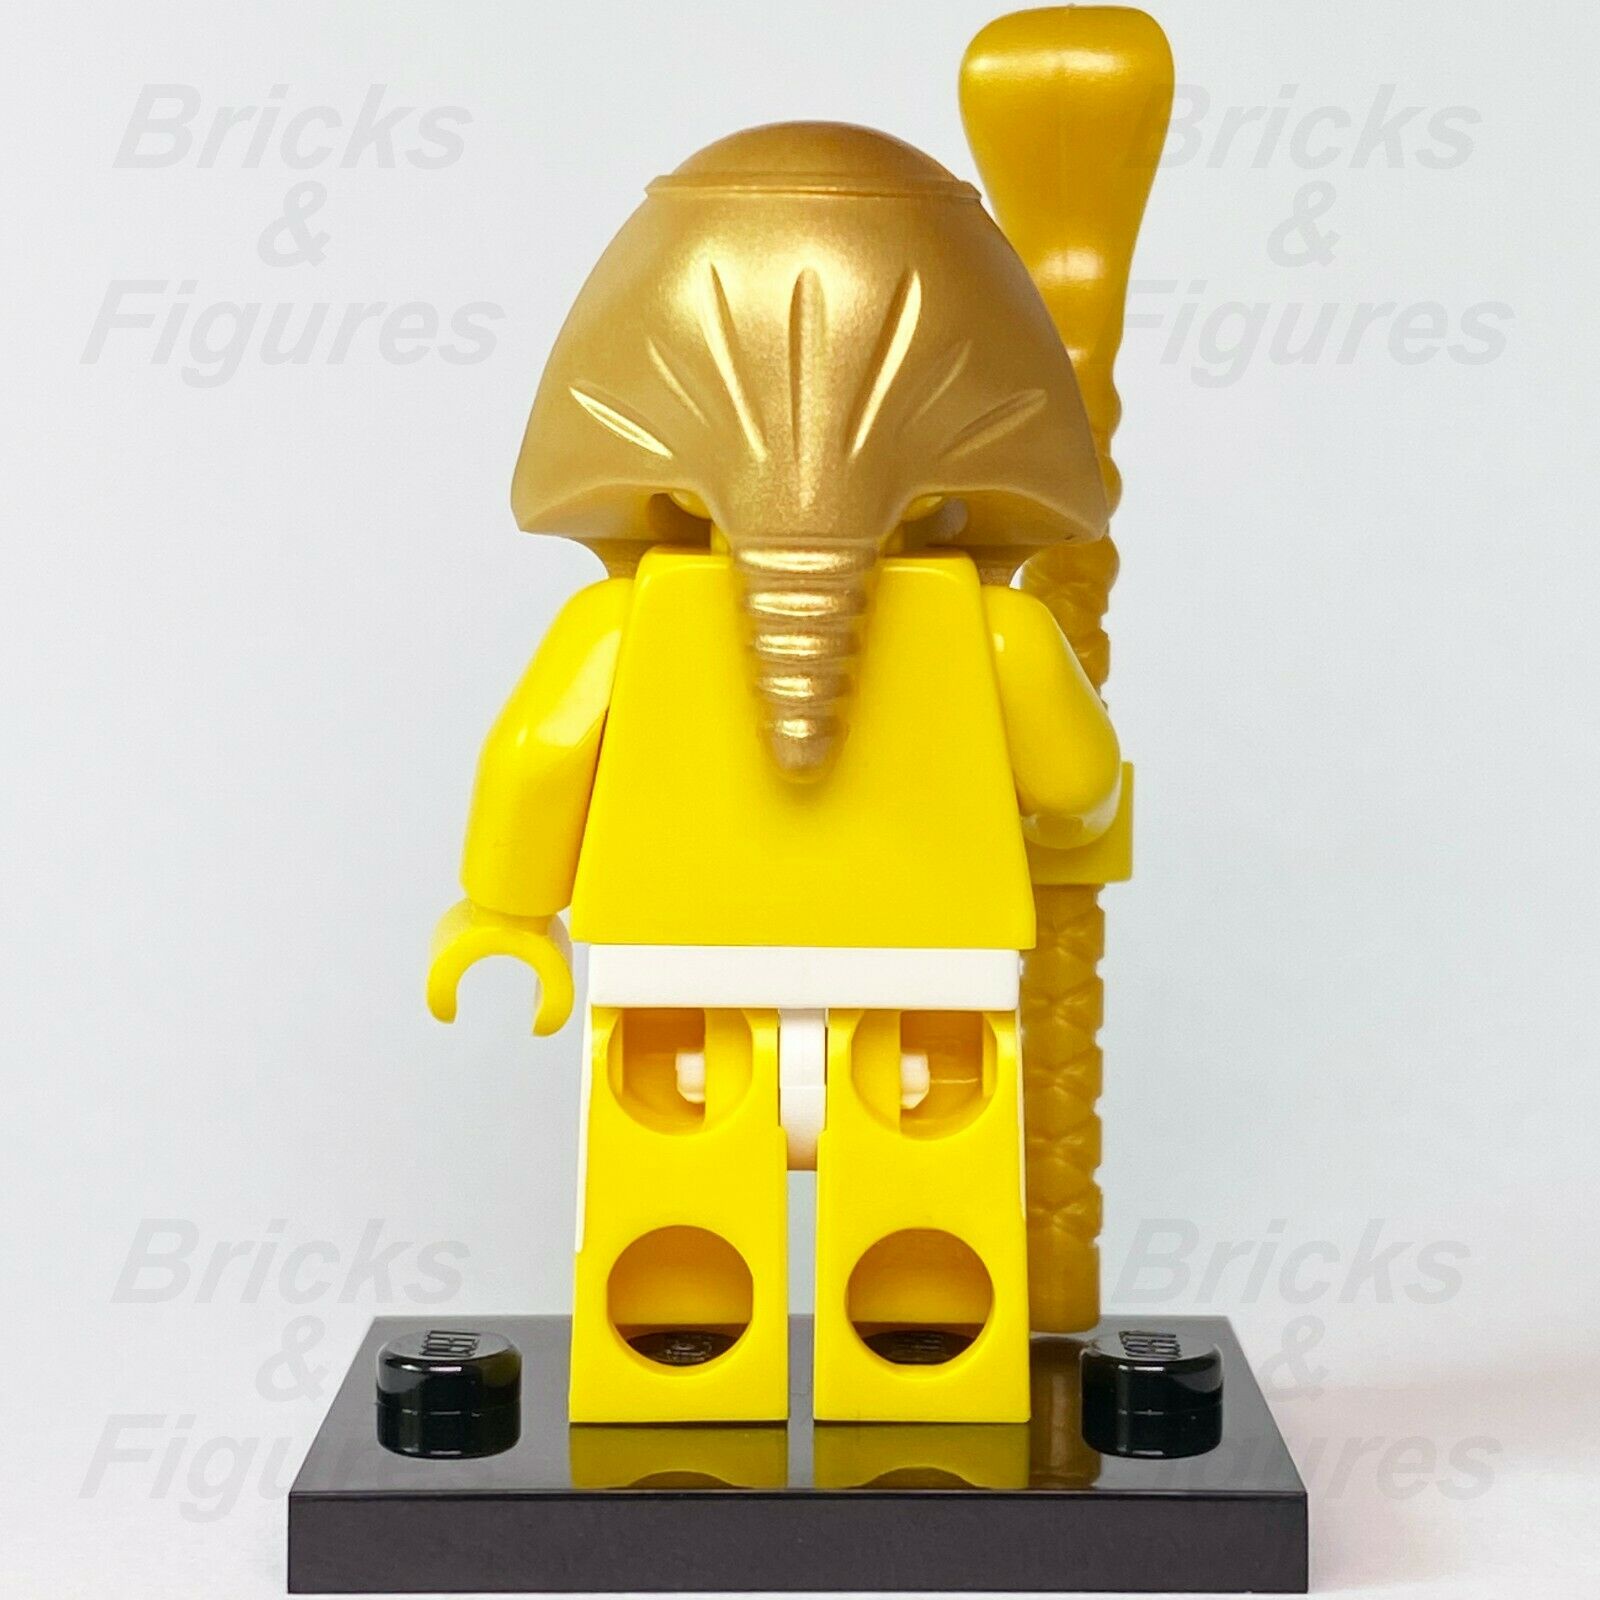 Collectible Minifigures LEGO Pharaoh Series 2 Egyptian Minifig 8684 - Bricks & Figures